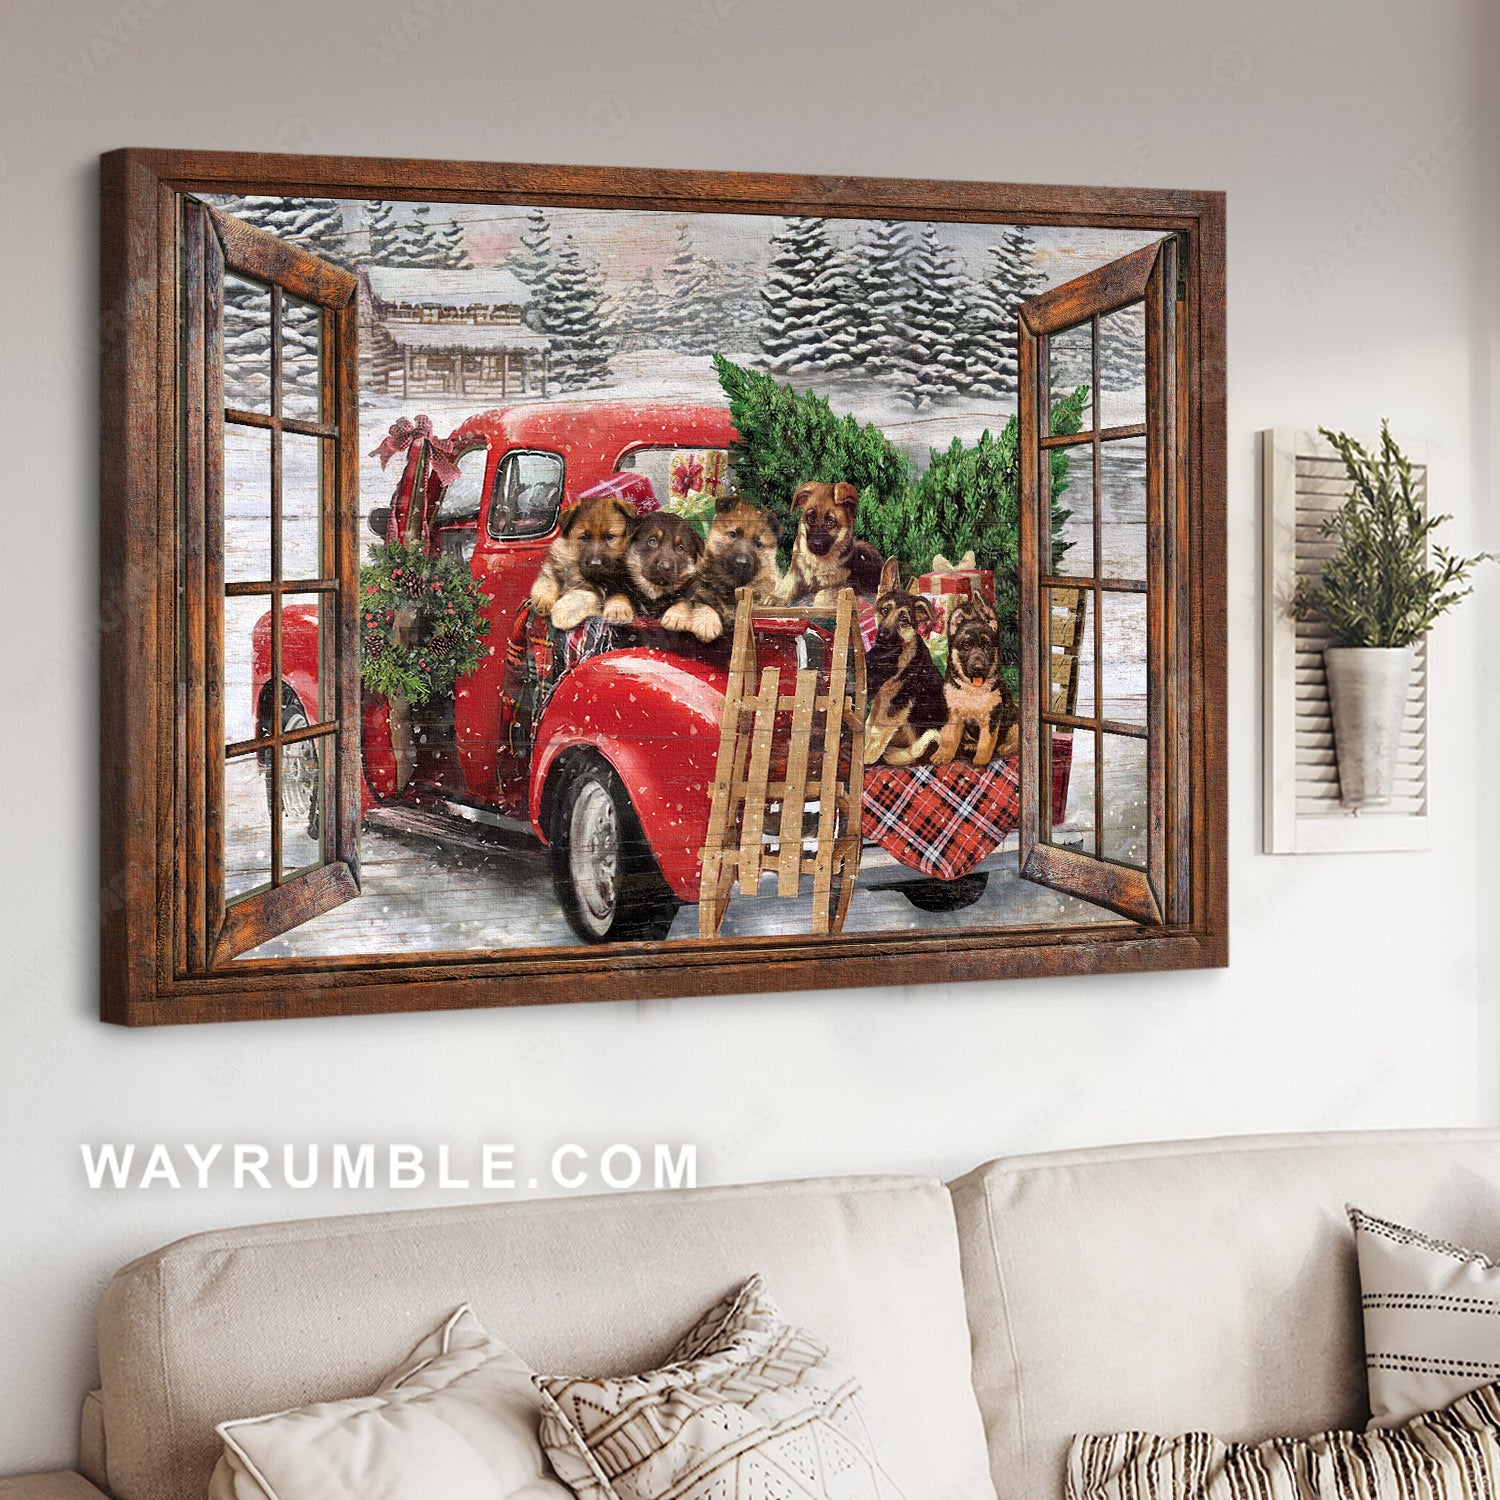 German Shepherd, Cute puppy, Red truck, Christmas vacation, Snow village - Jesus Landscape Canvas Prints, Home Decor Wall Art